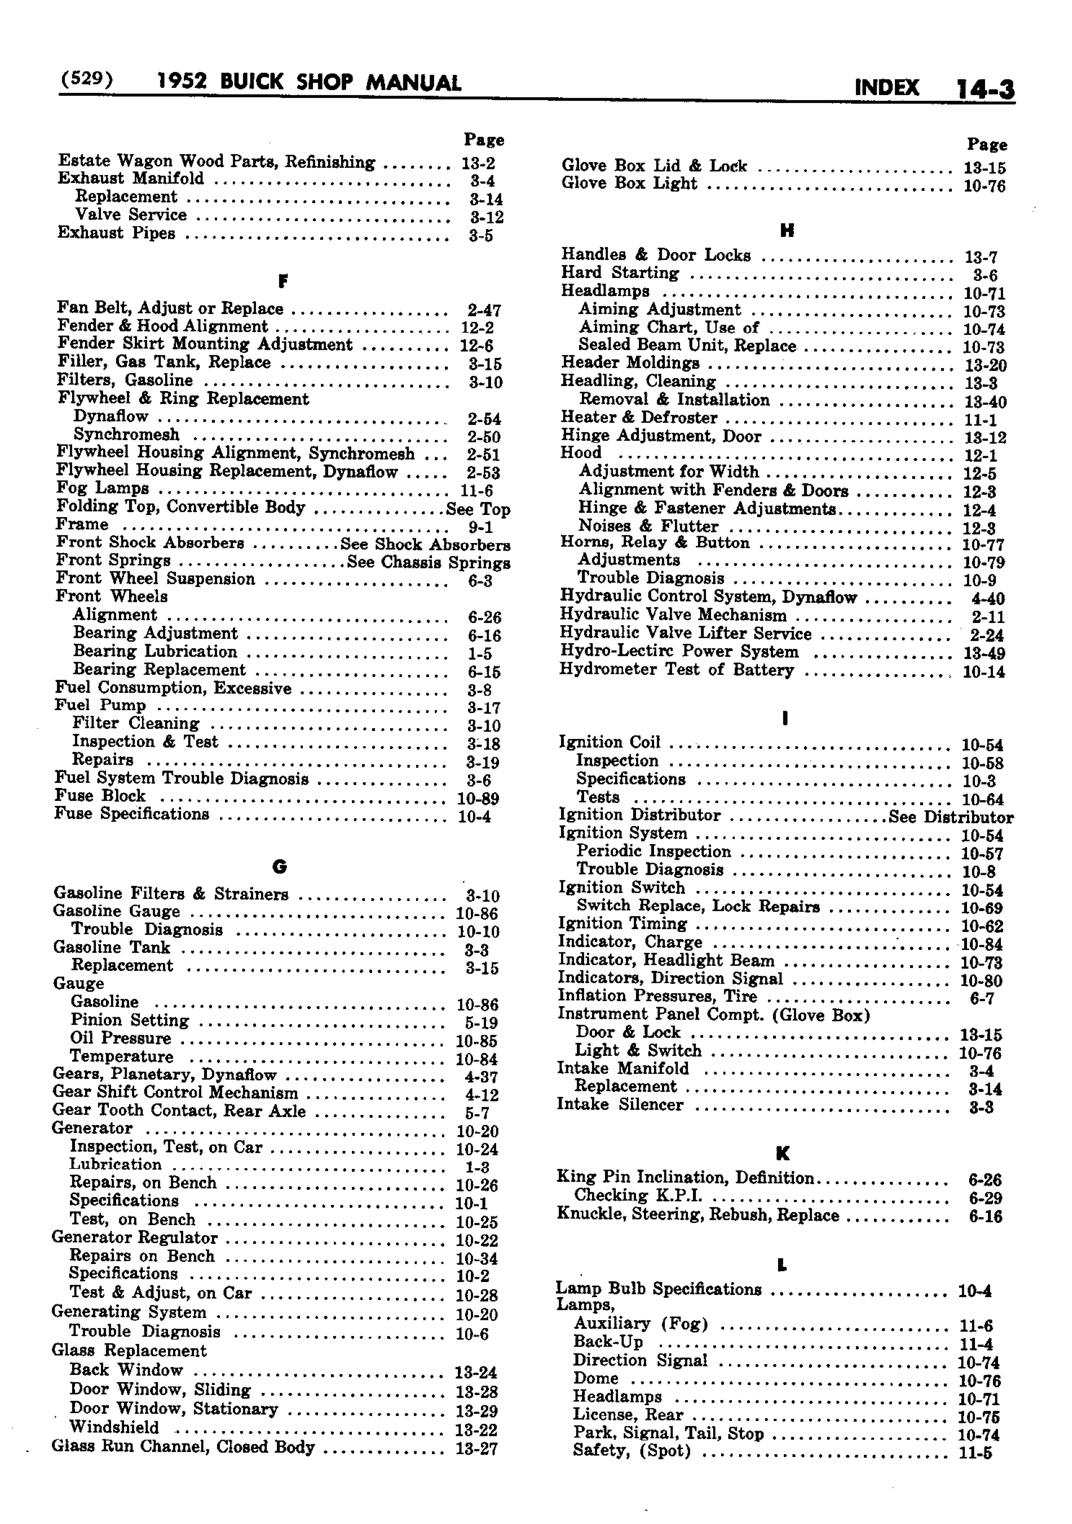 n_15 1952 Buick Shop Manual - Index-003-003.jpg